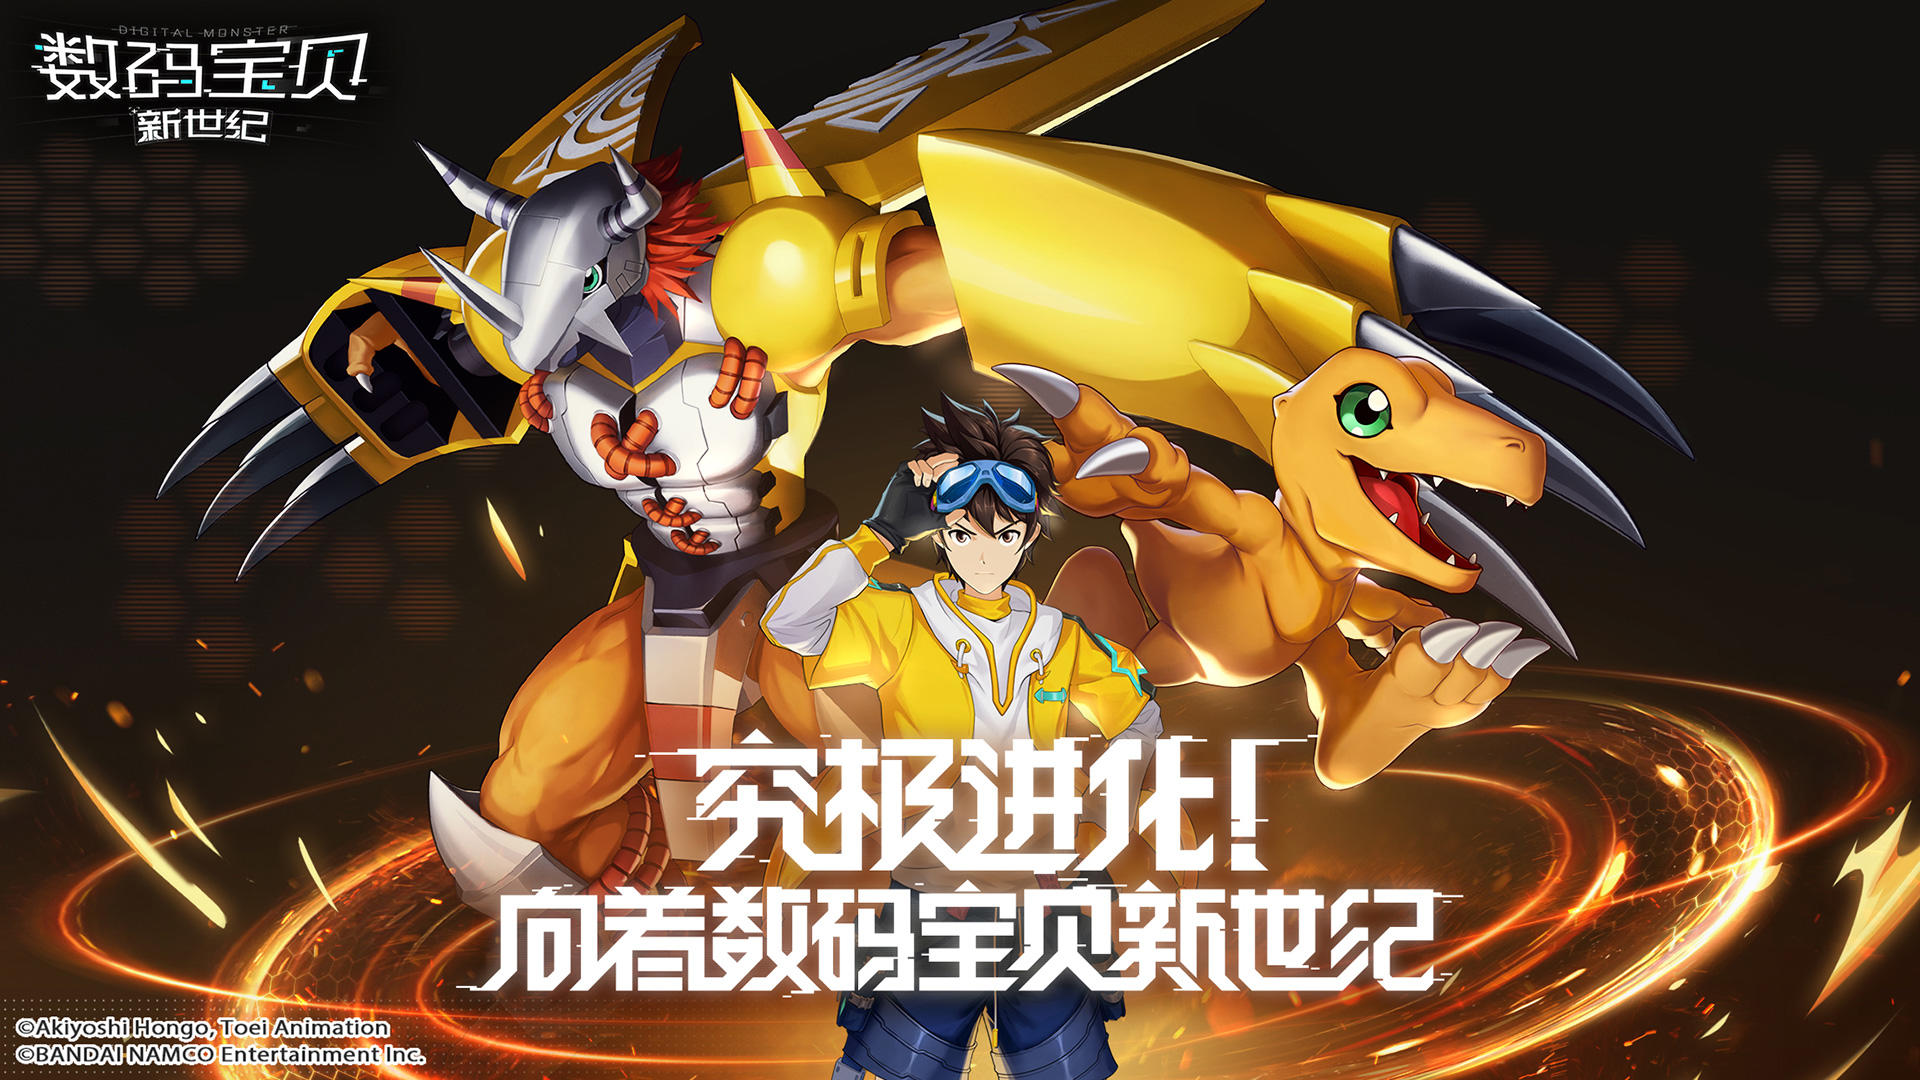 Digimon new century english download